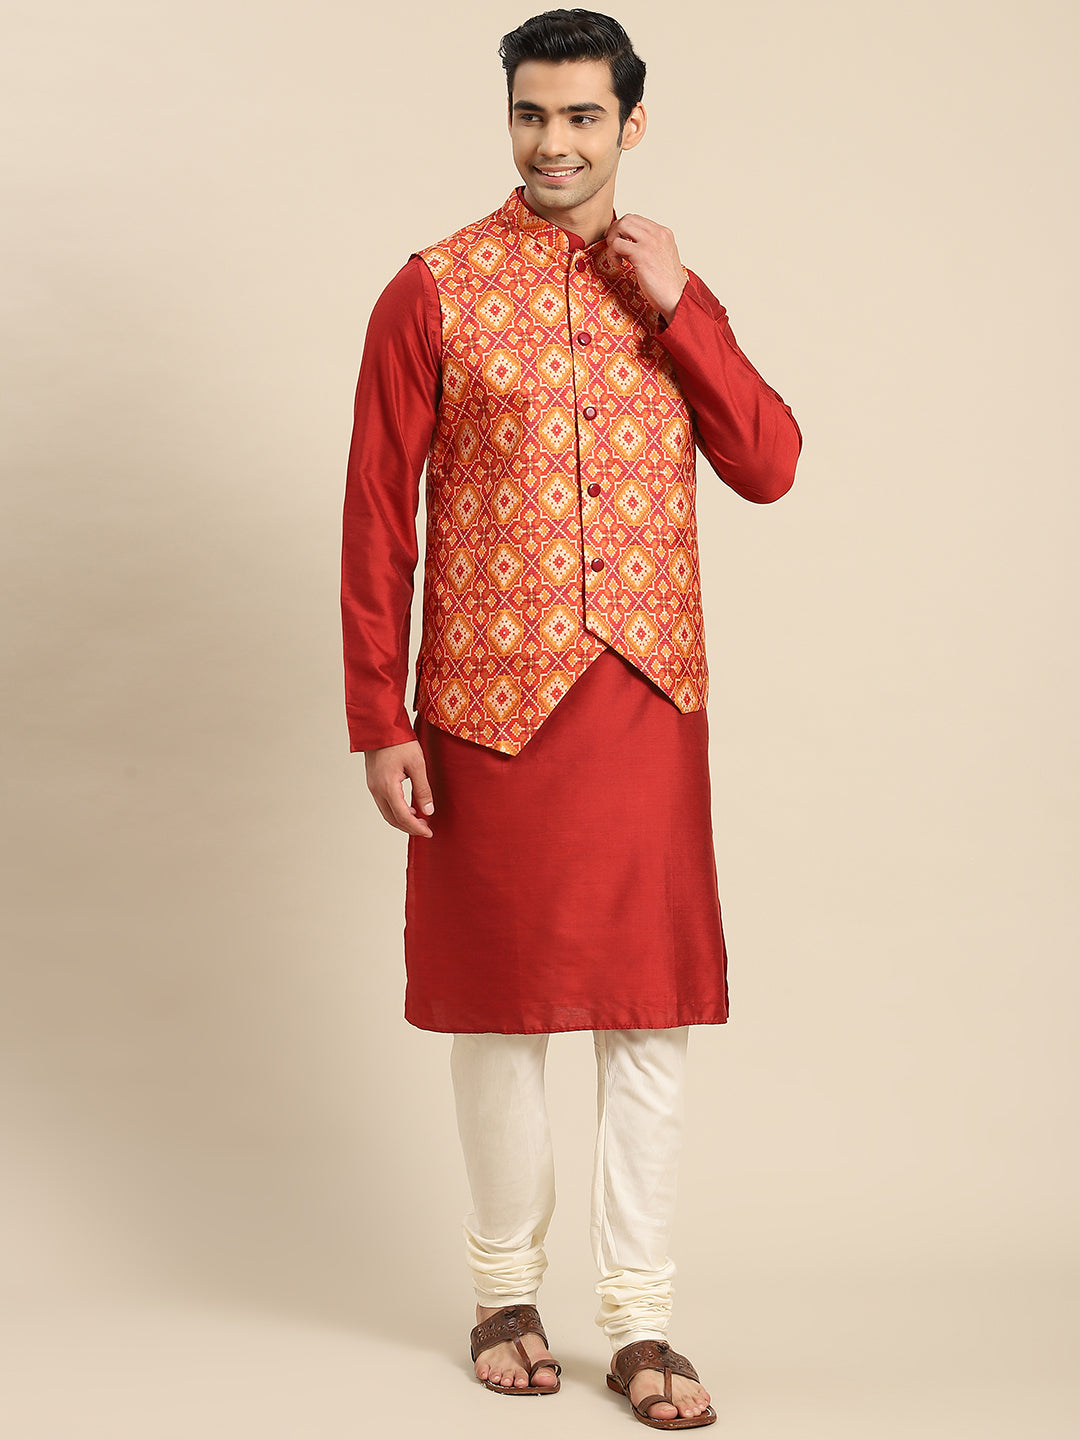 Red Silk Long Cream Nehru Jacket Kurta Pyjama DTKPJ133 | Red jacket men,  Mens suits sky blue, Nehru jackets